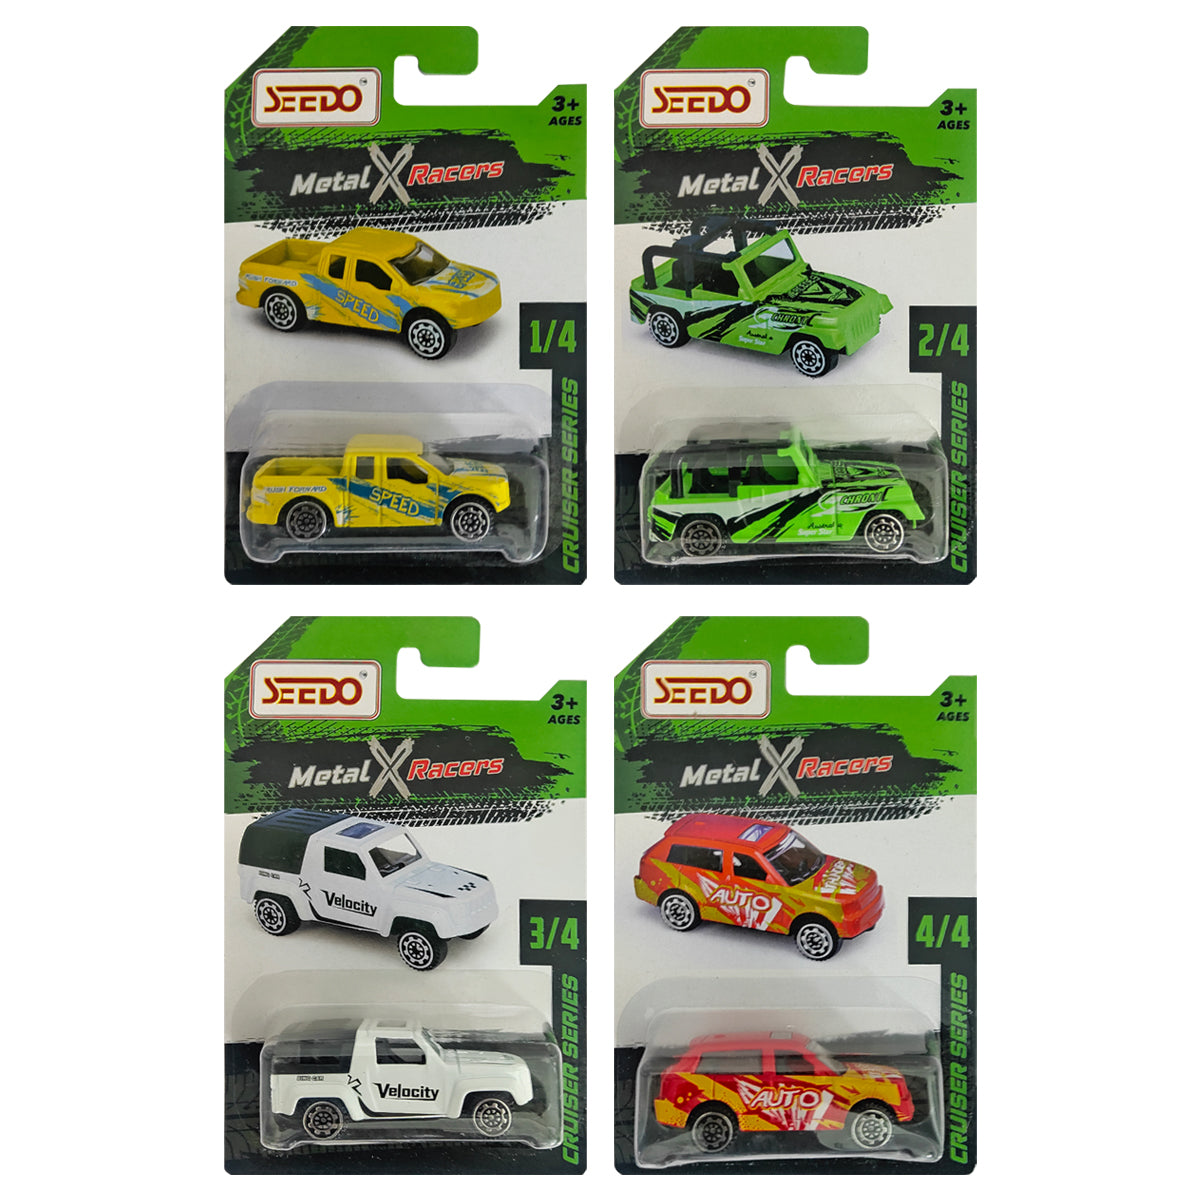 Seedo Metal X Racers Cruiser Series Die Cast Car for Ages 3+, Pack Of 4